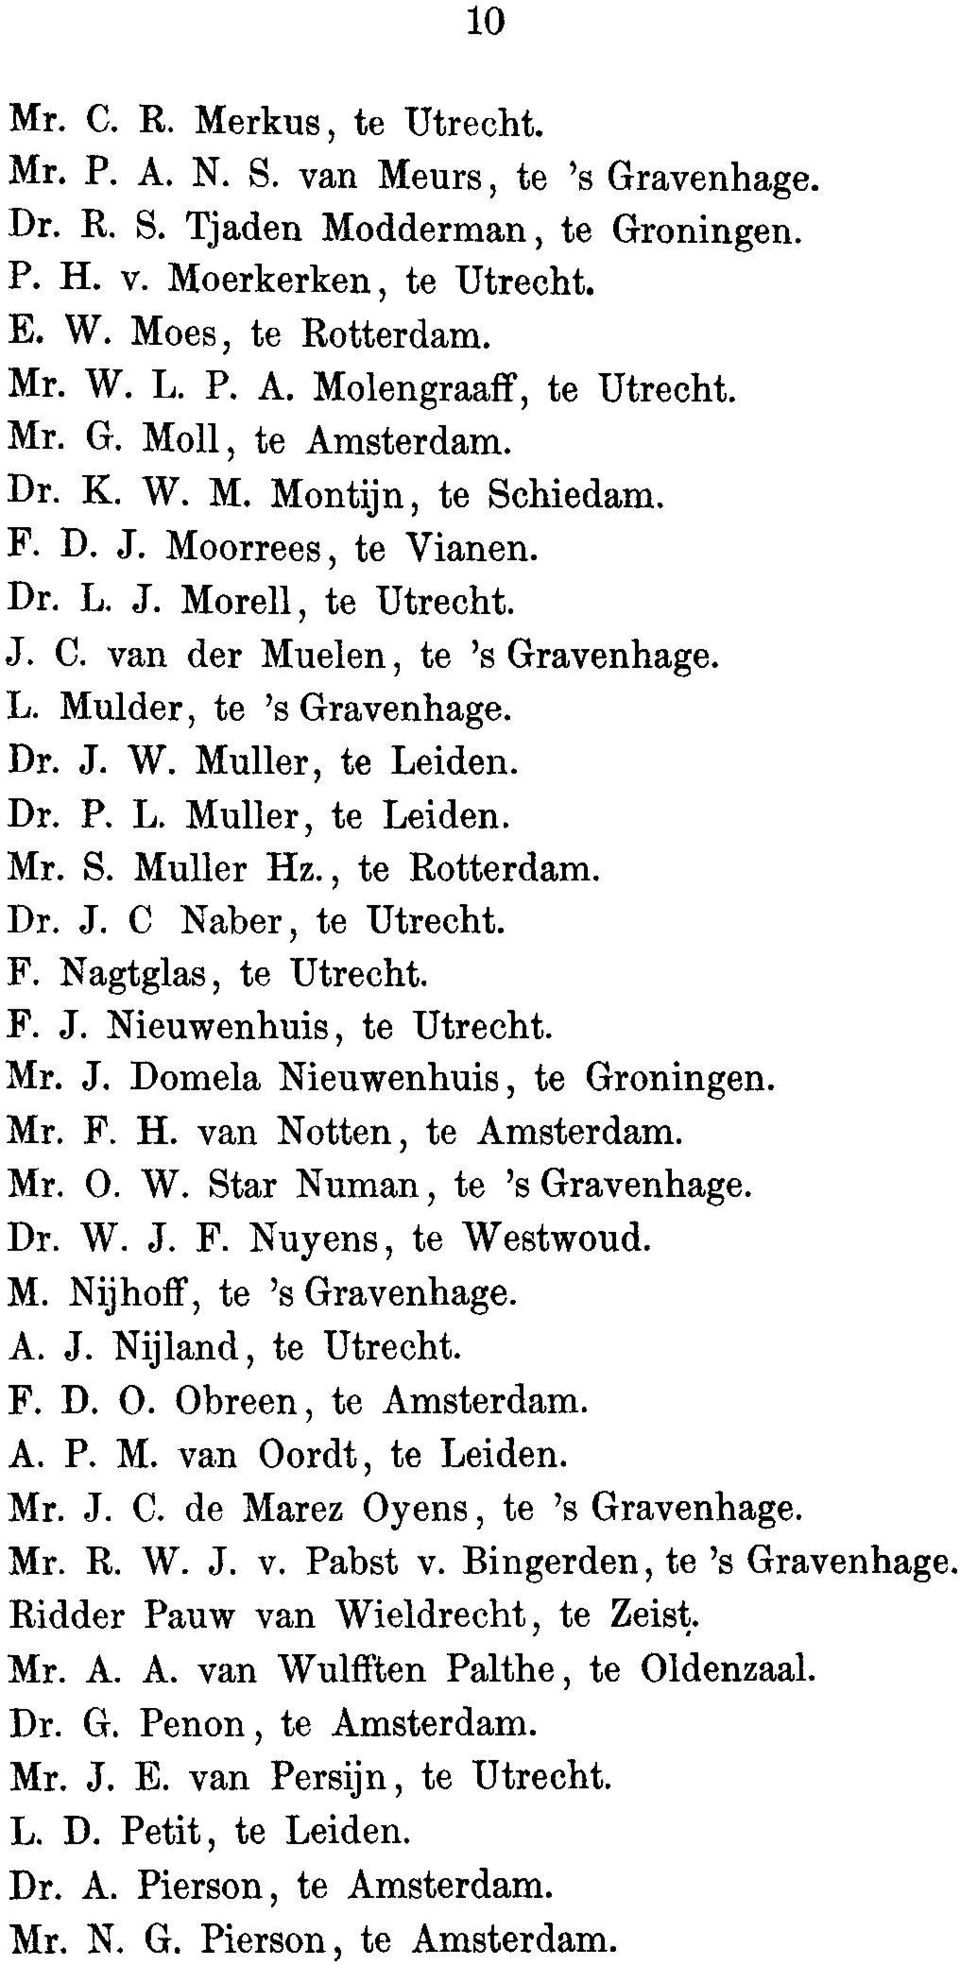 Dr. P. L. Muller, to Leiden. Mr. S. Muller Hz., to Rotterdam. Dr. J. C Naber, to Utrecht. F. Nagtglas, to Utrecht. F. J. Nieuwenhuis, to Utrecht. Mr. J. Domela Nieuwenhuis, to Groningen. Mr. F.. H. van Notten, to Amsterdam.